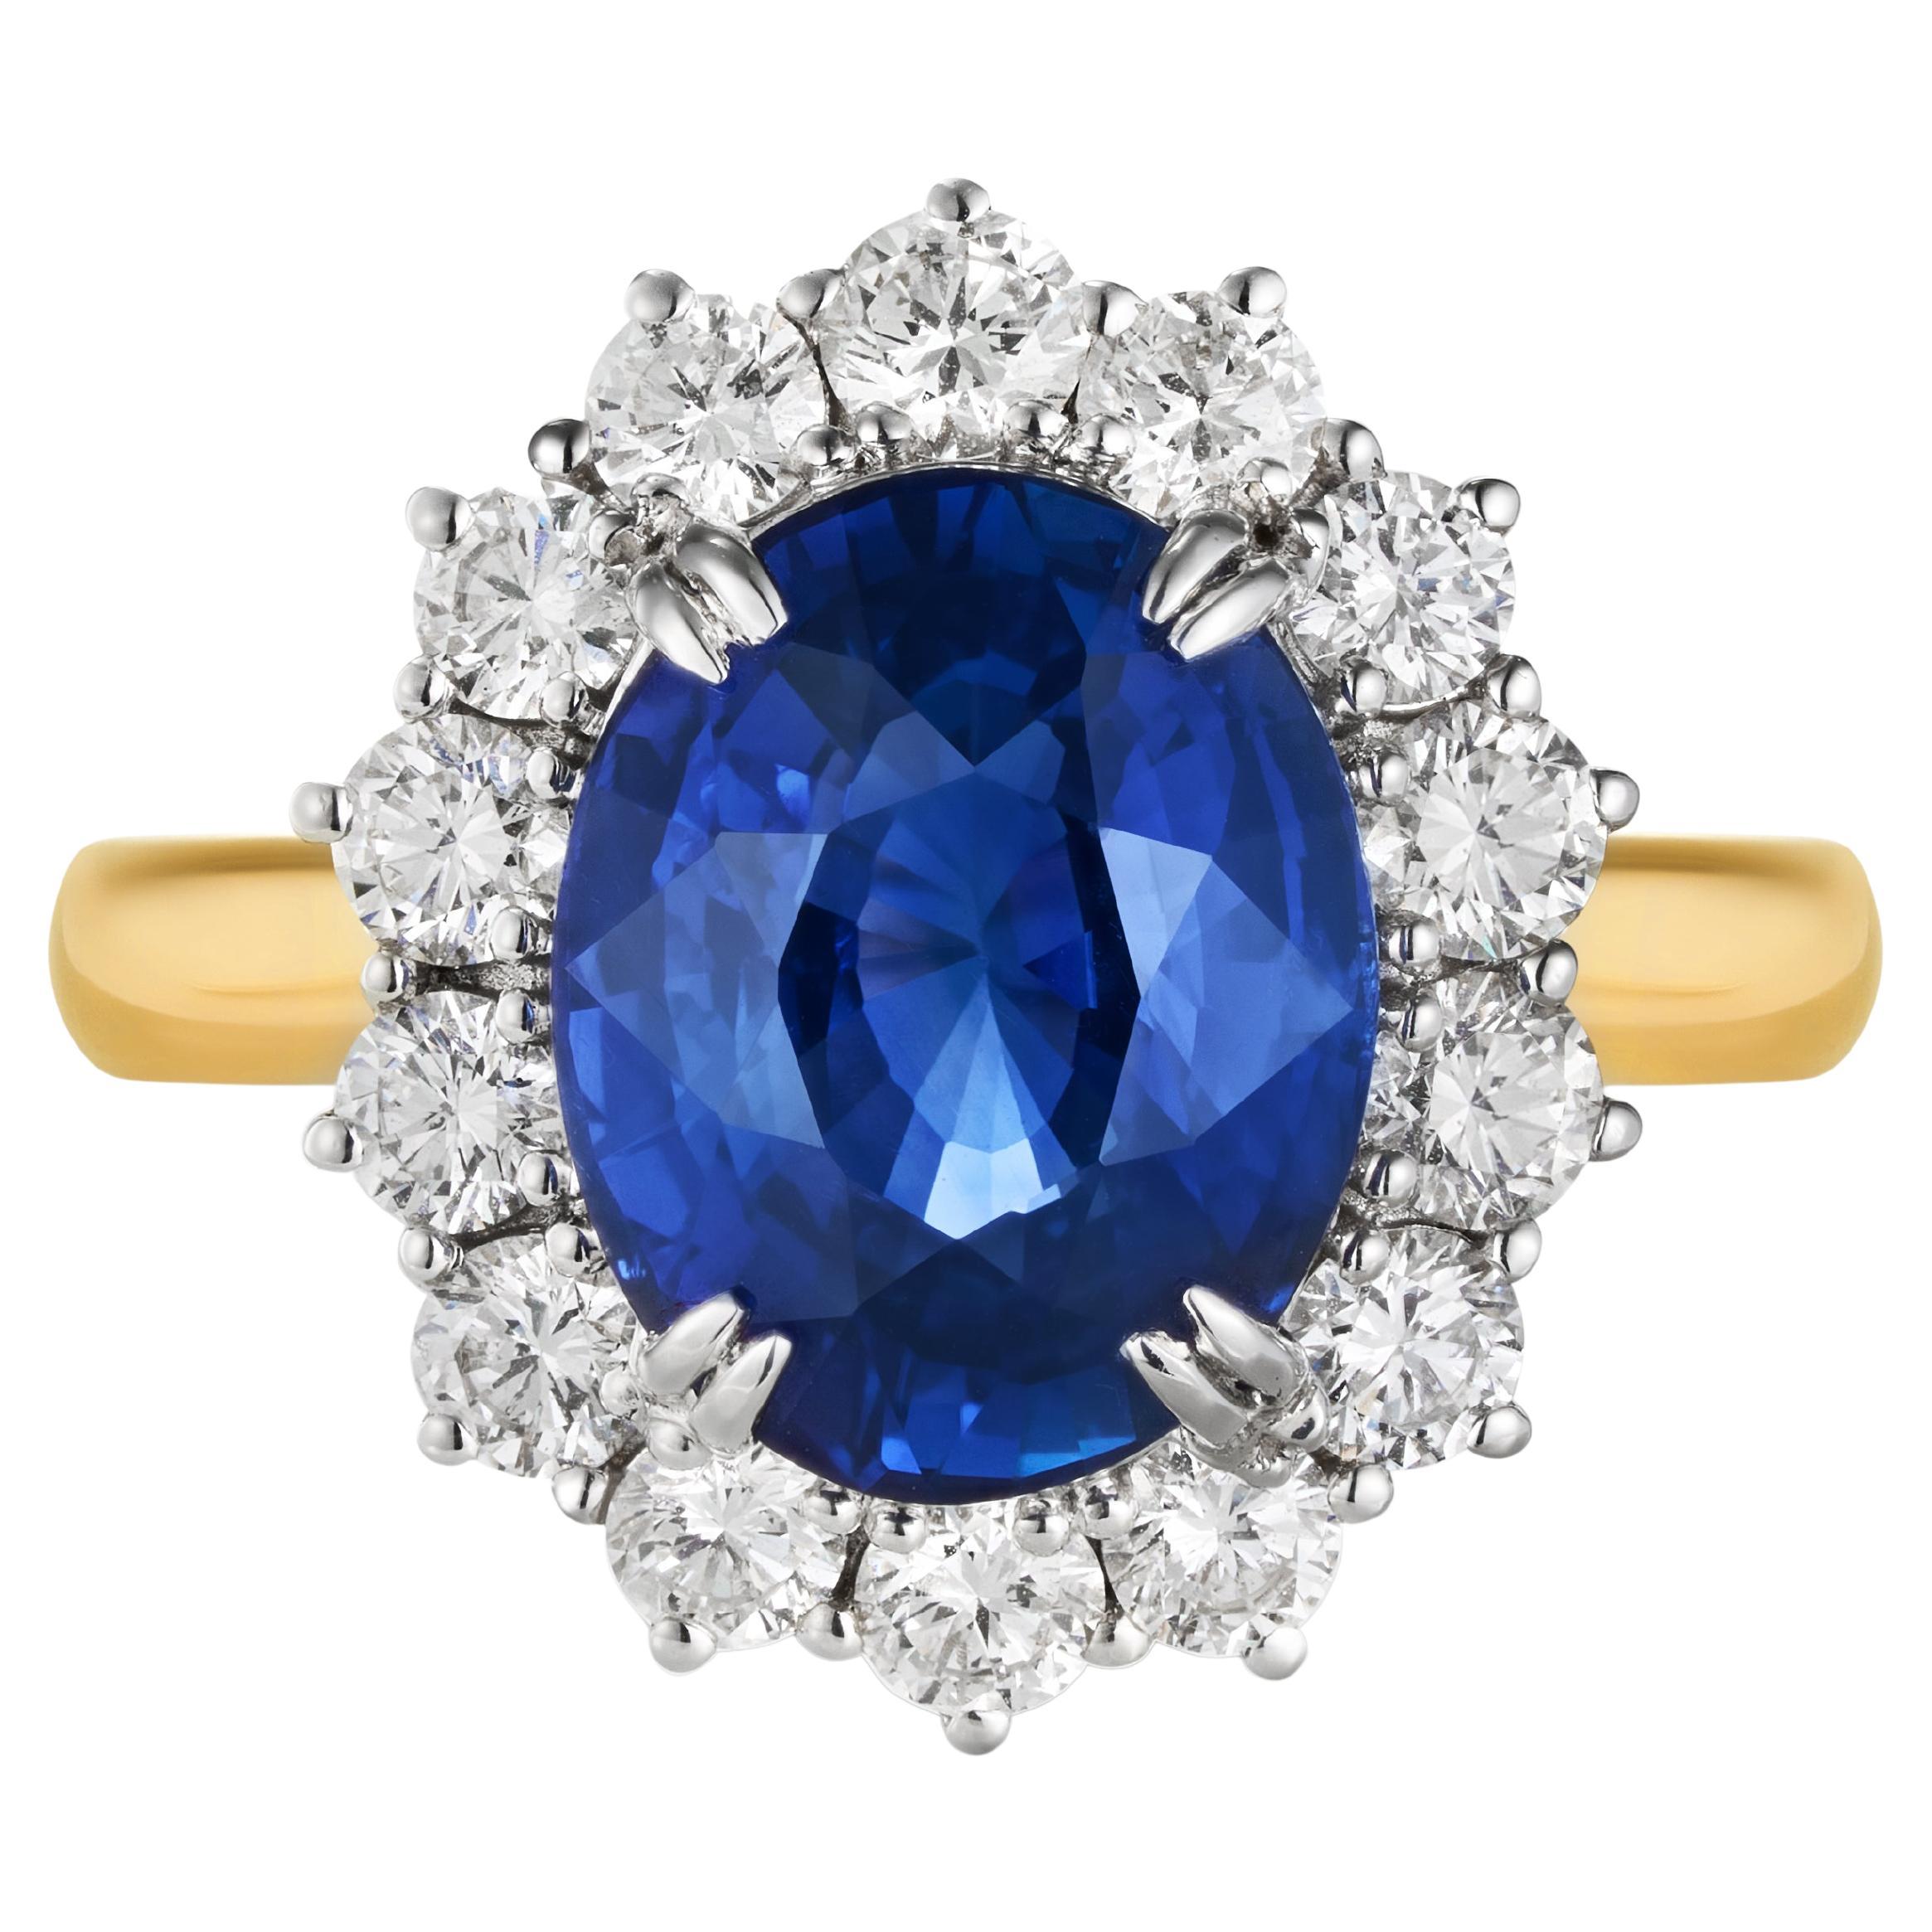 Bague avec saphir bleu royal naturel de 5 carats et diamants